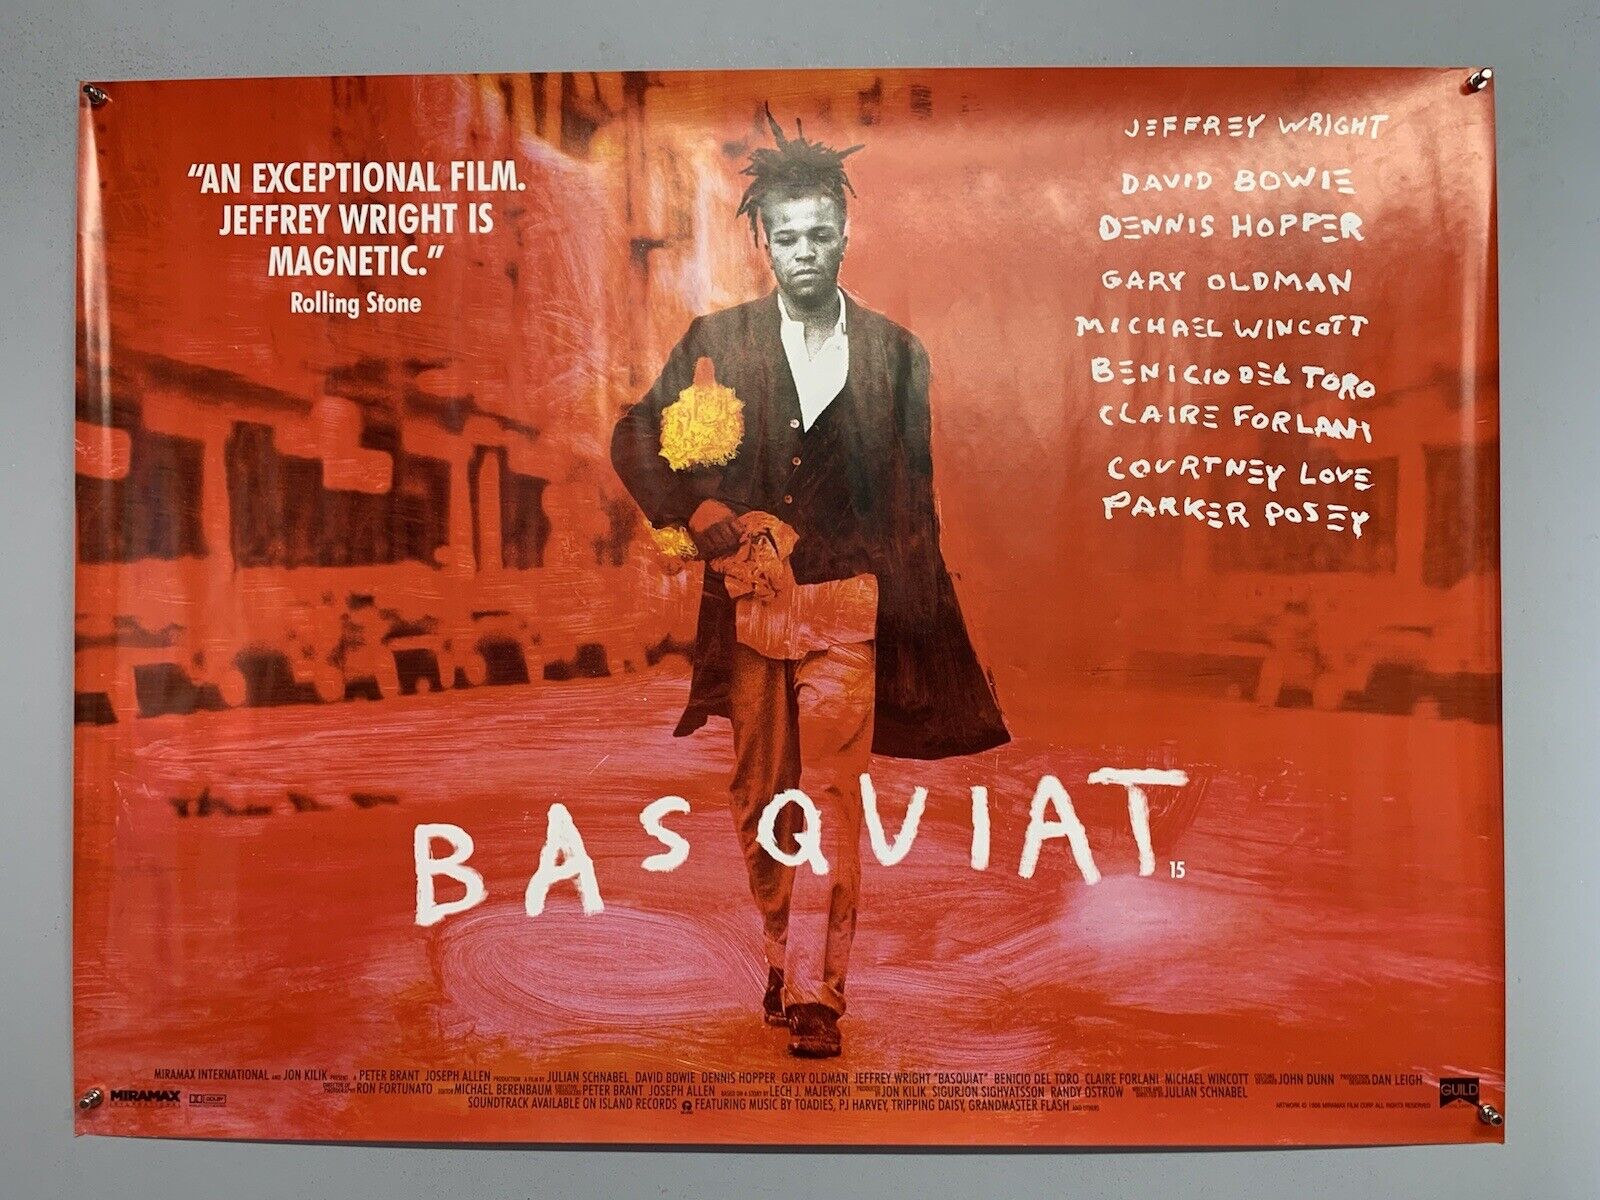 David Bowie Courtney Love Poster Original Vintage Film Promotion Basquiat 1996